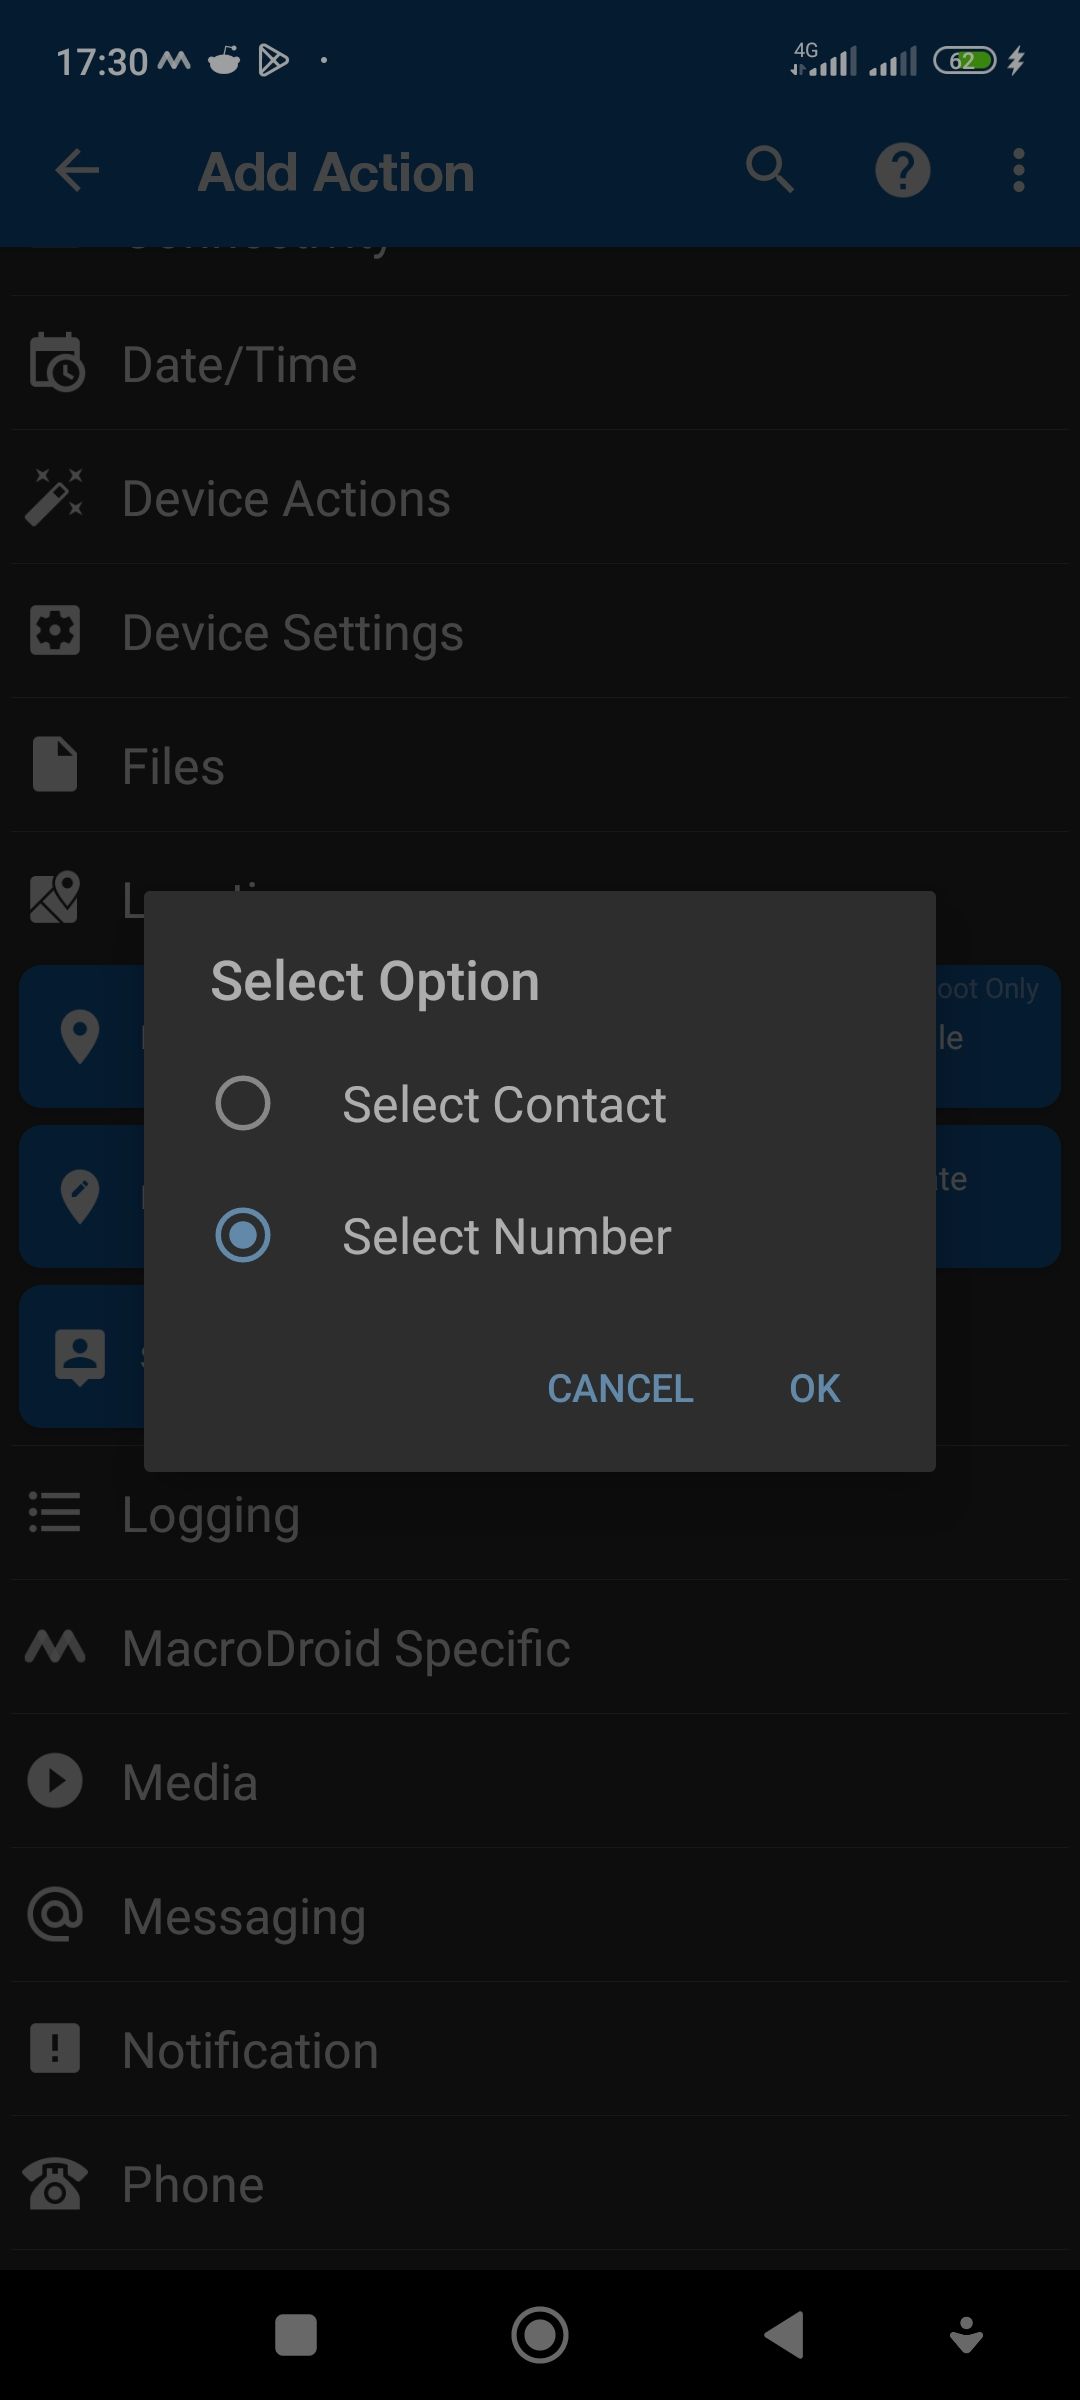 Configure MacroDroid to share location via SMS